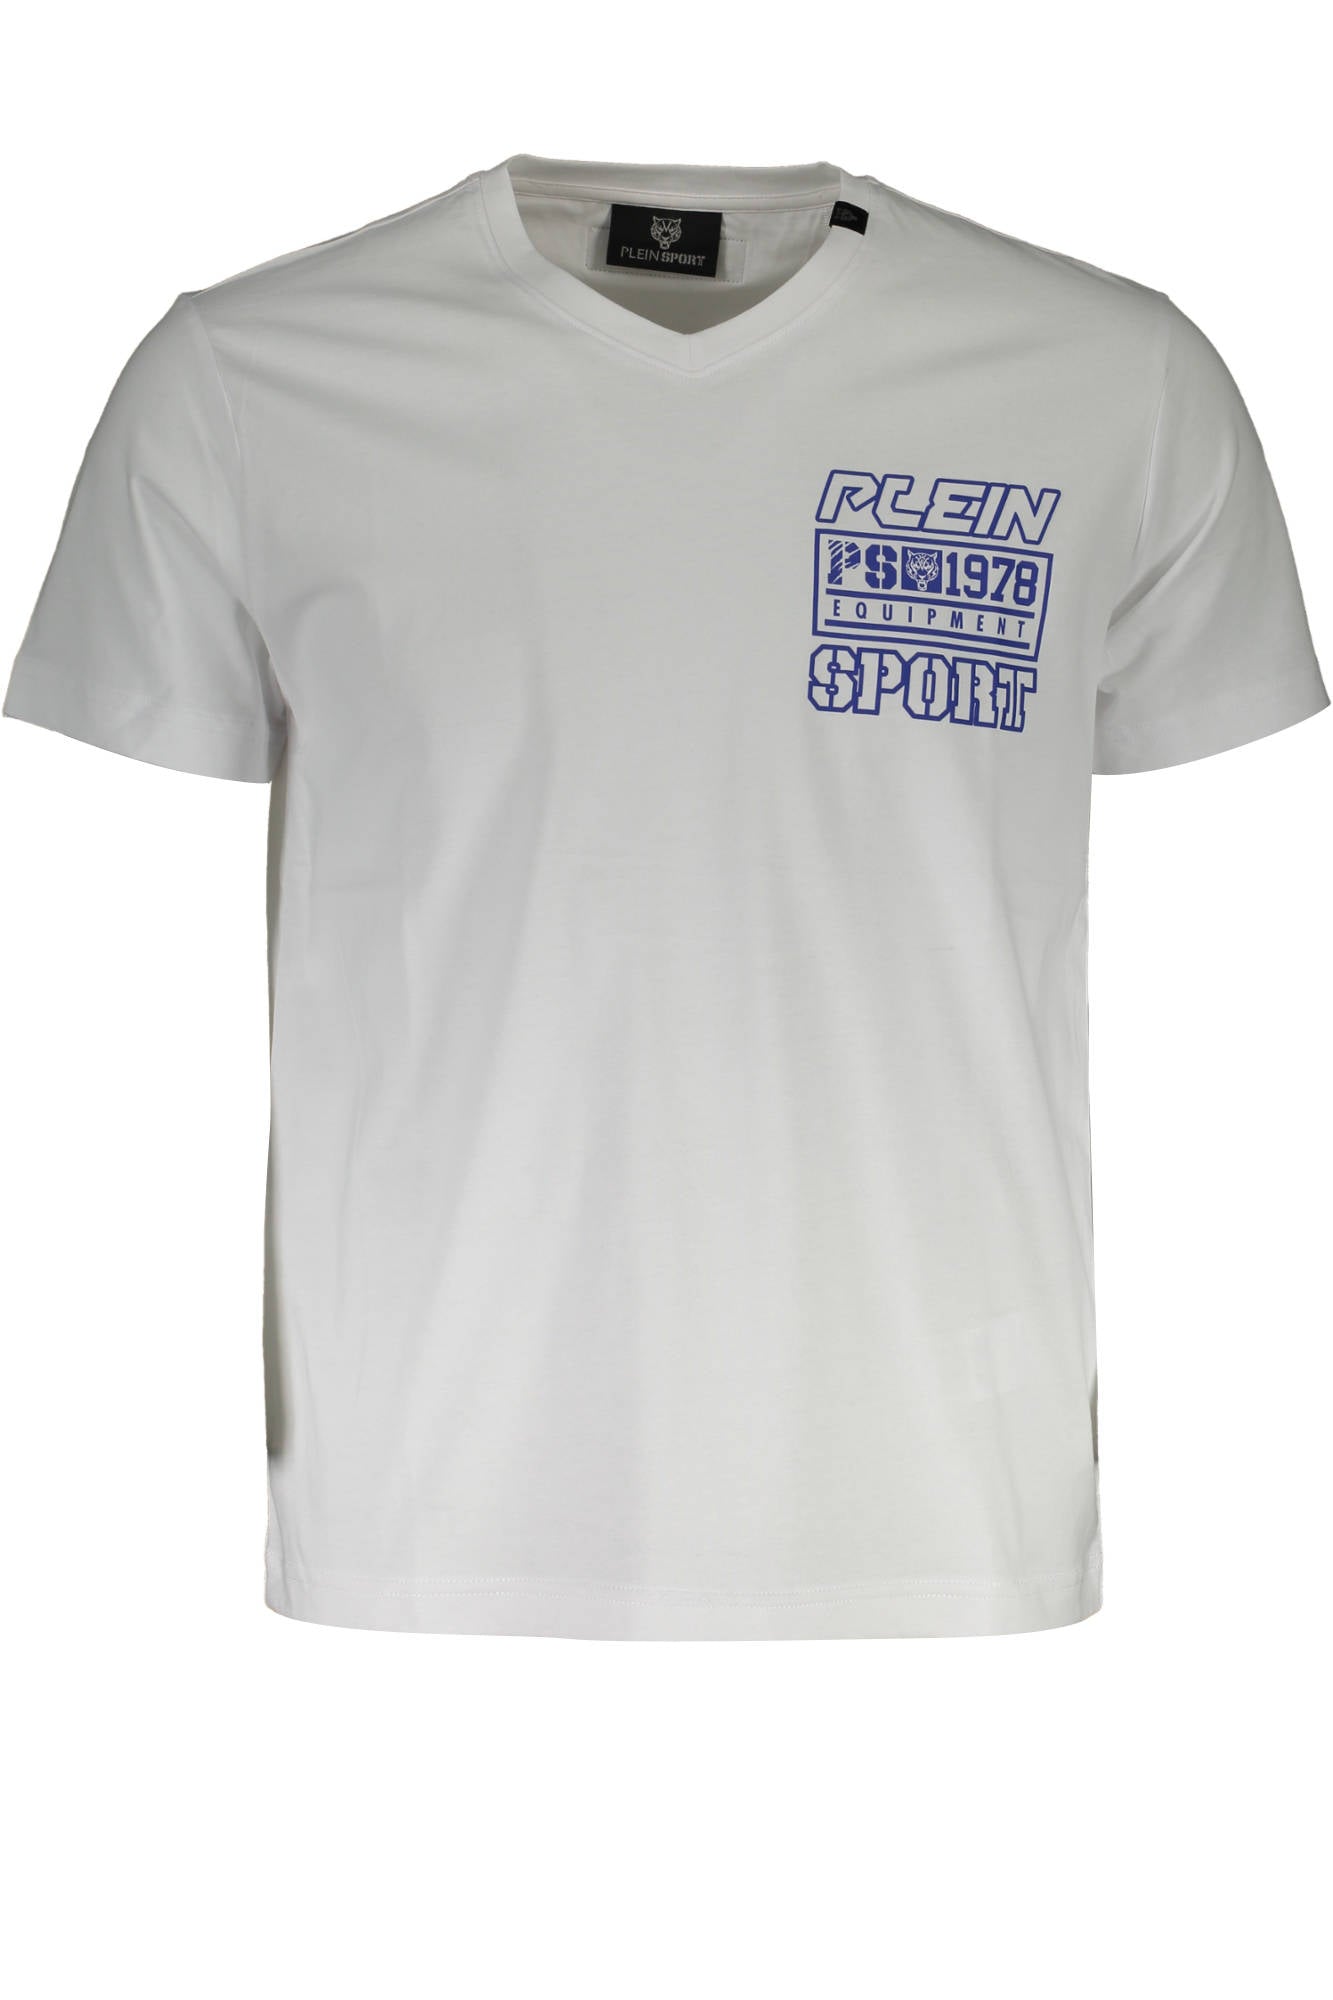 Plein Sport White Cotton T-Shirt - Fizigo